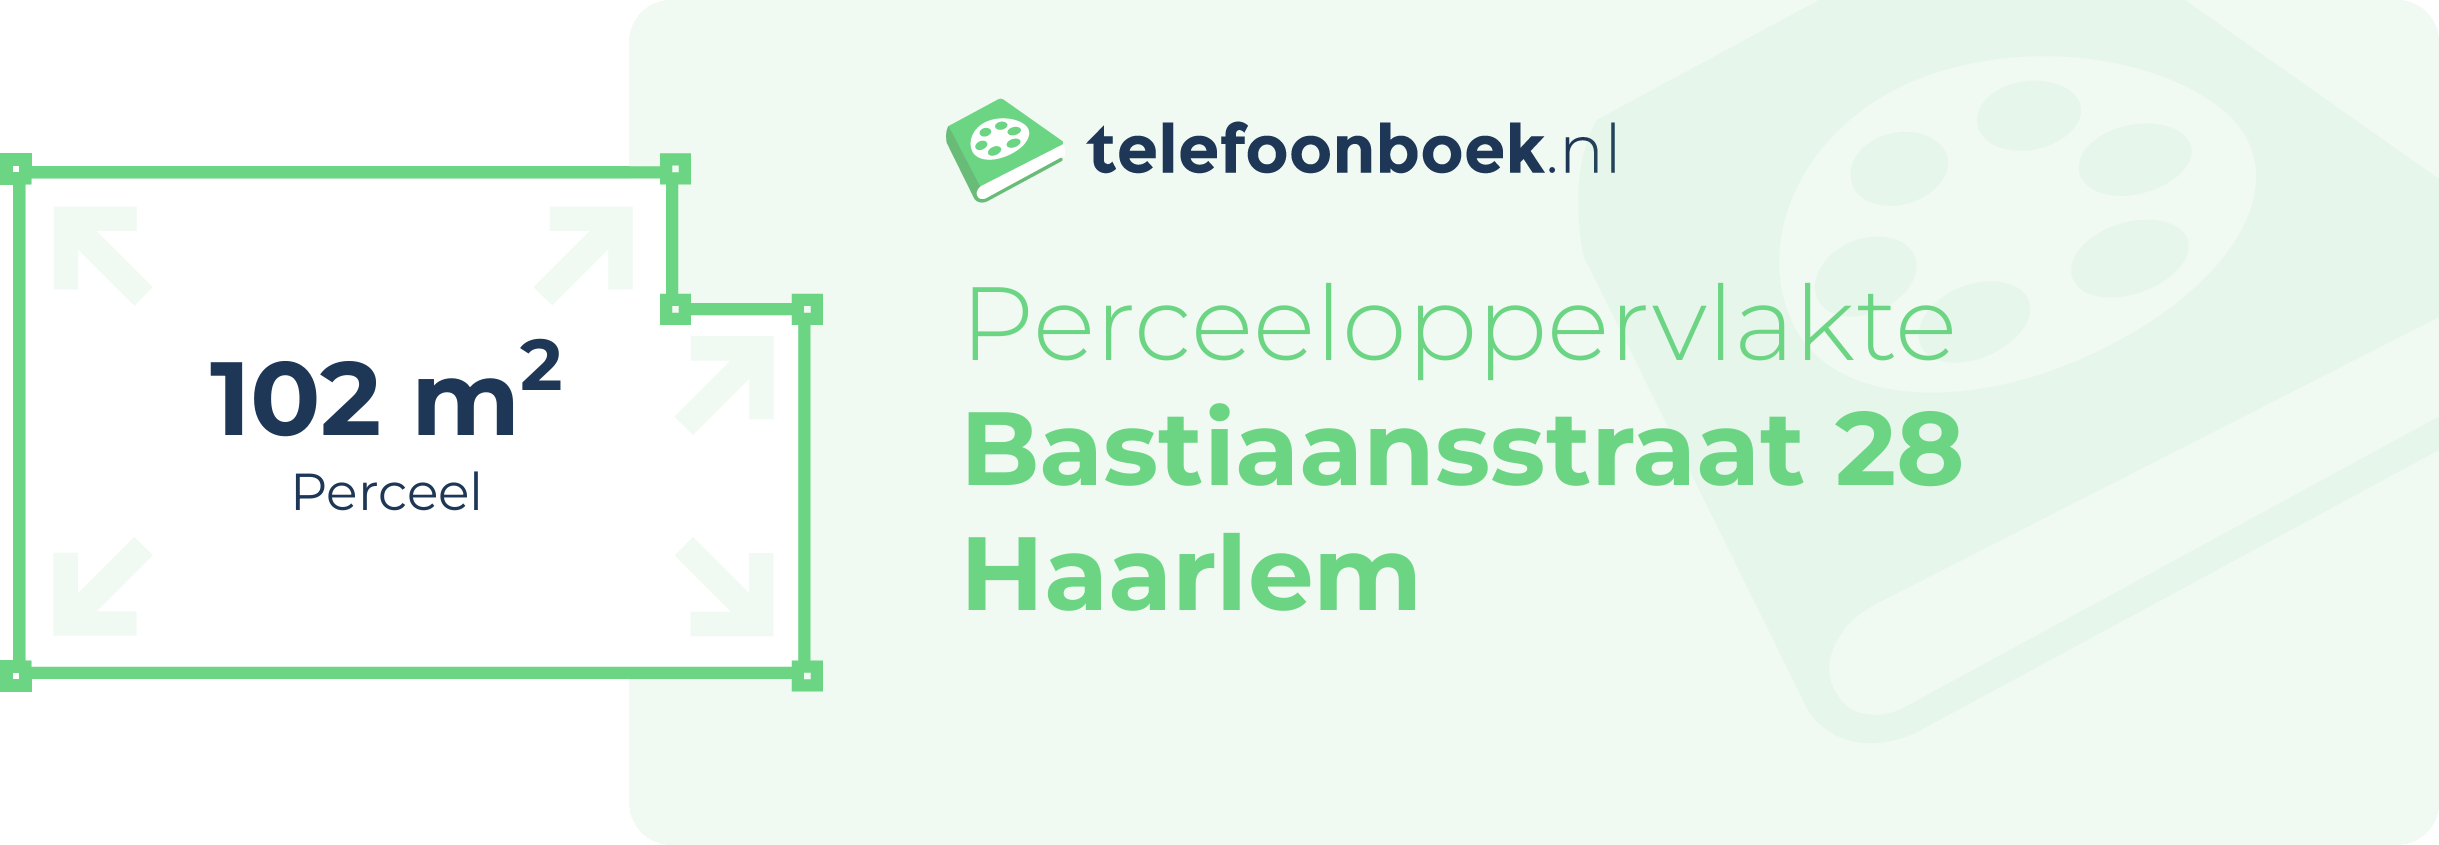 Perceeloppervlakte Bastiaansstraat 28 Haarlem